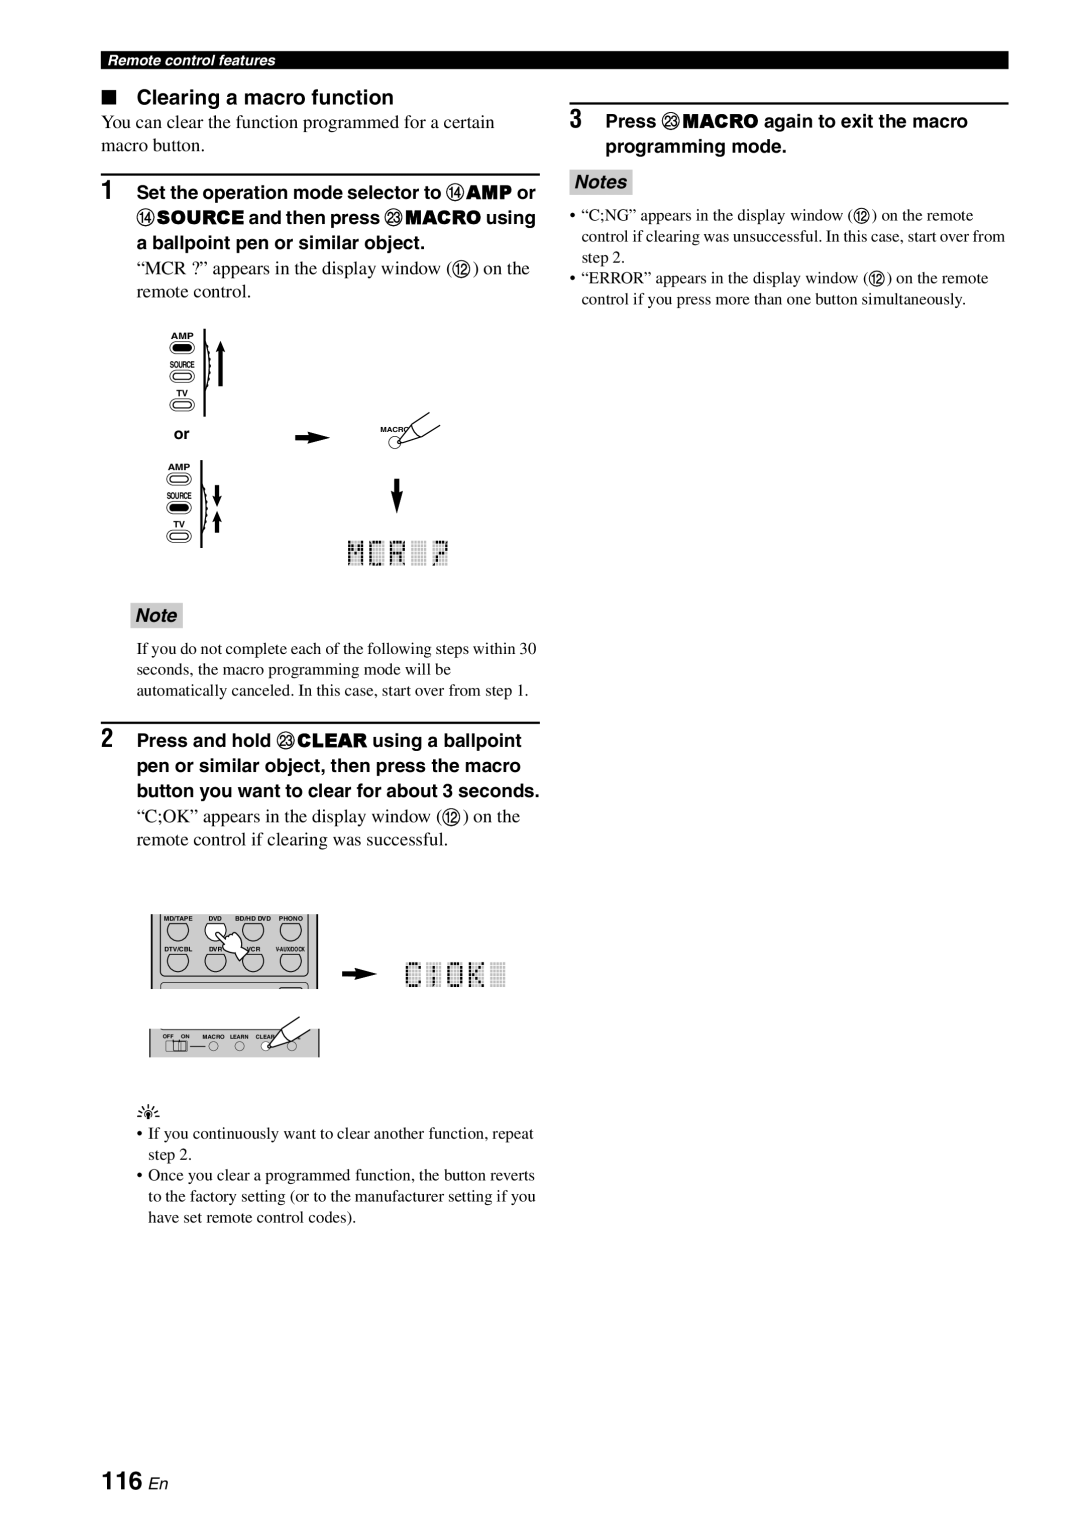 Yamaha RX-V3800 owner manual 116 En, Clearing a macro function, Press MMACRO again to exit the macro programming mode 